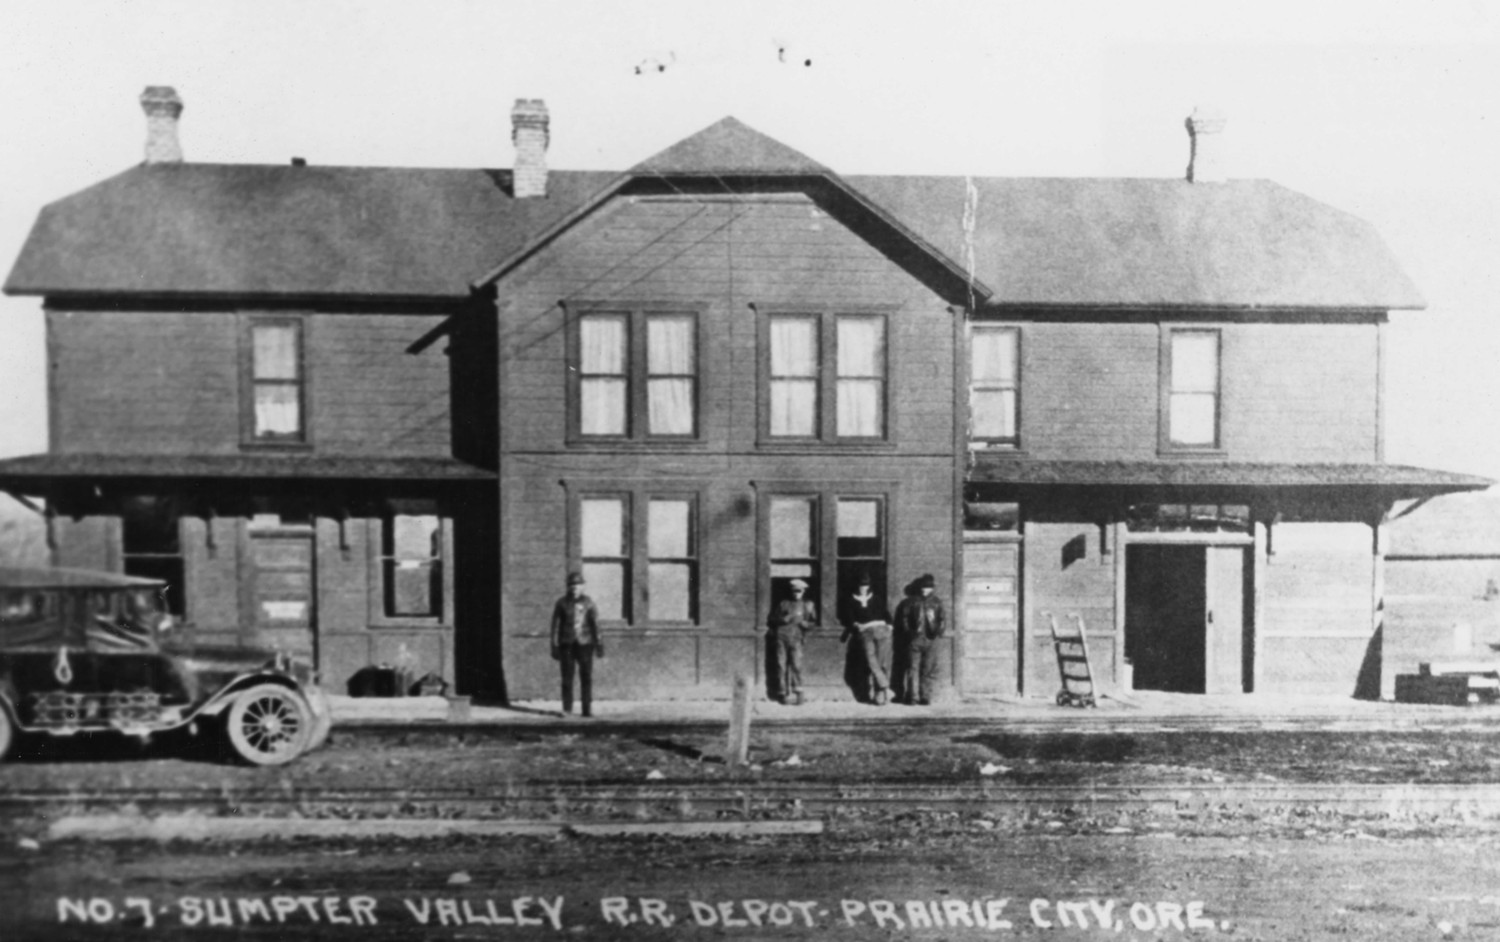 Sumpter Valley Railway Passenger Station, Prairie City Oregon South elevation (1920)